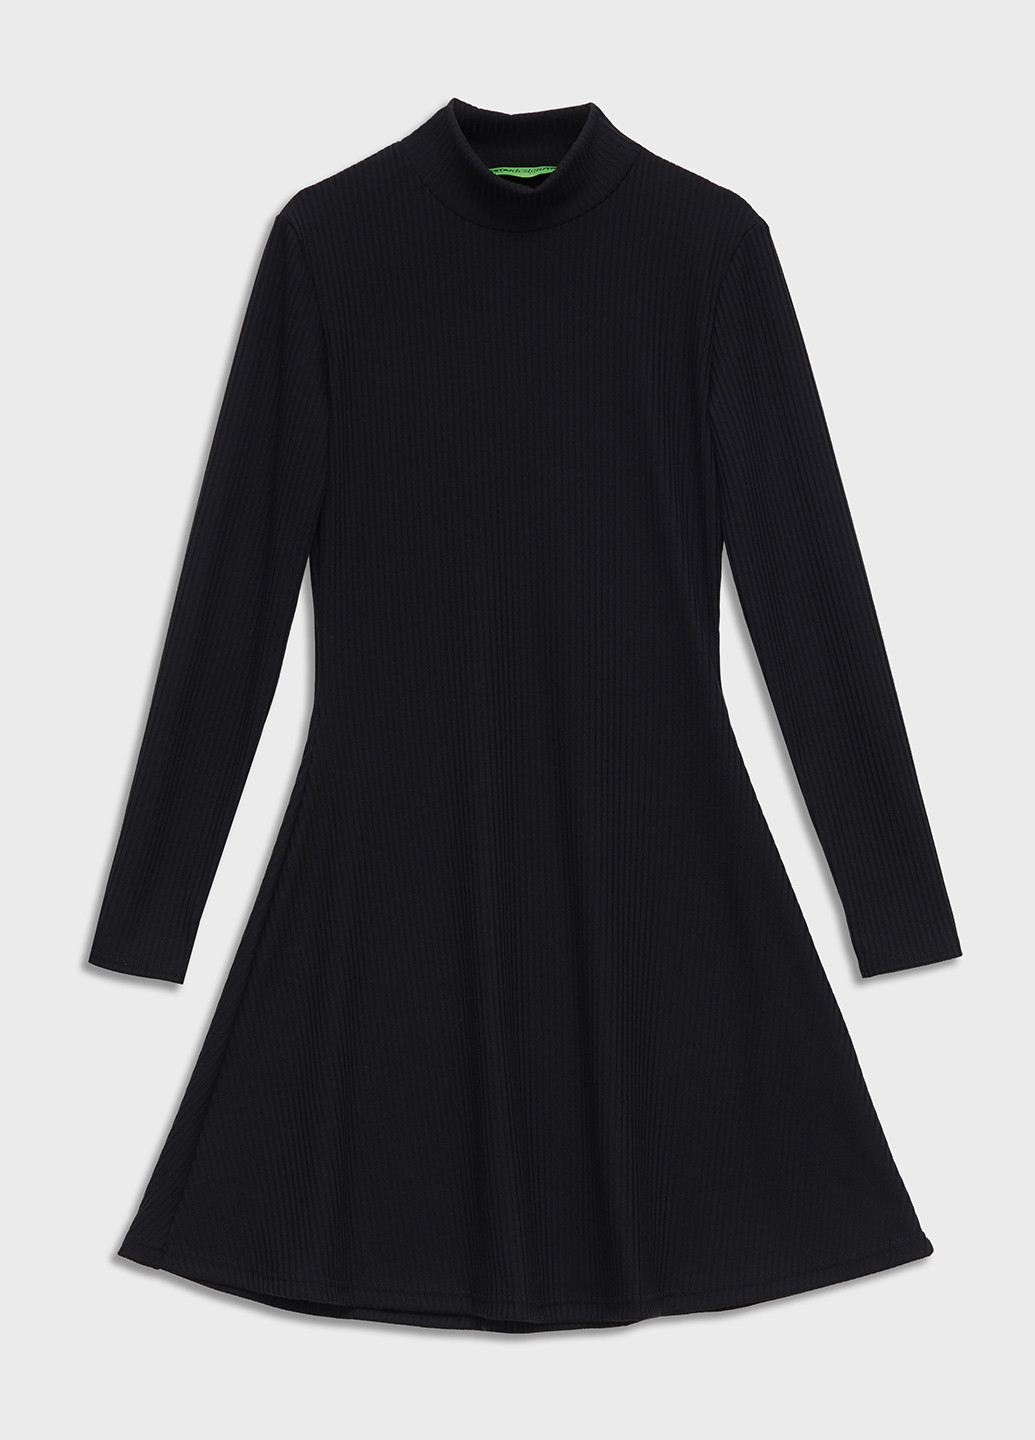 Чорна кежуал жіноча трикотажна міні сукня - гольф сукня-водолазка KASTA design однотонна